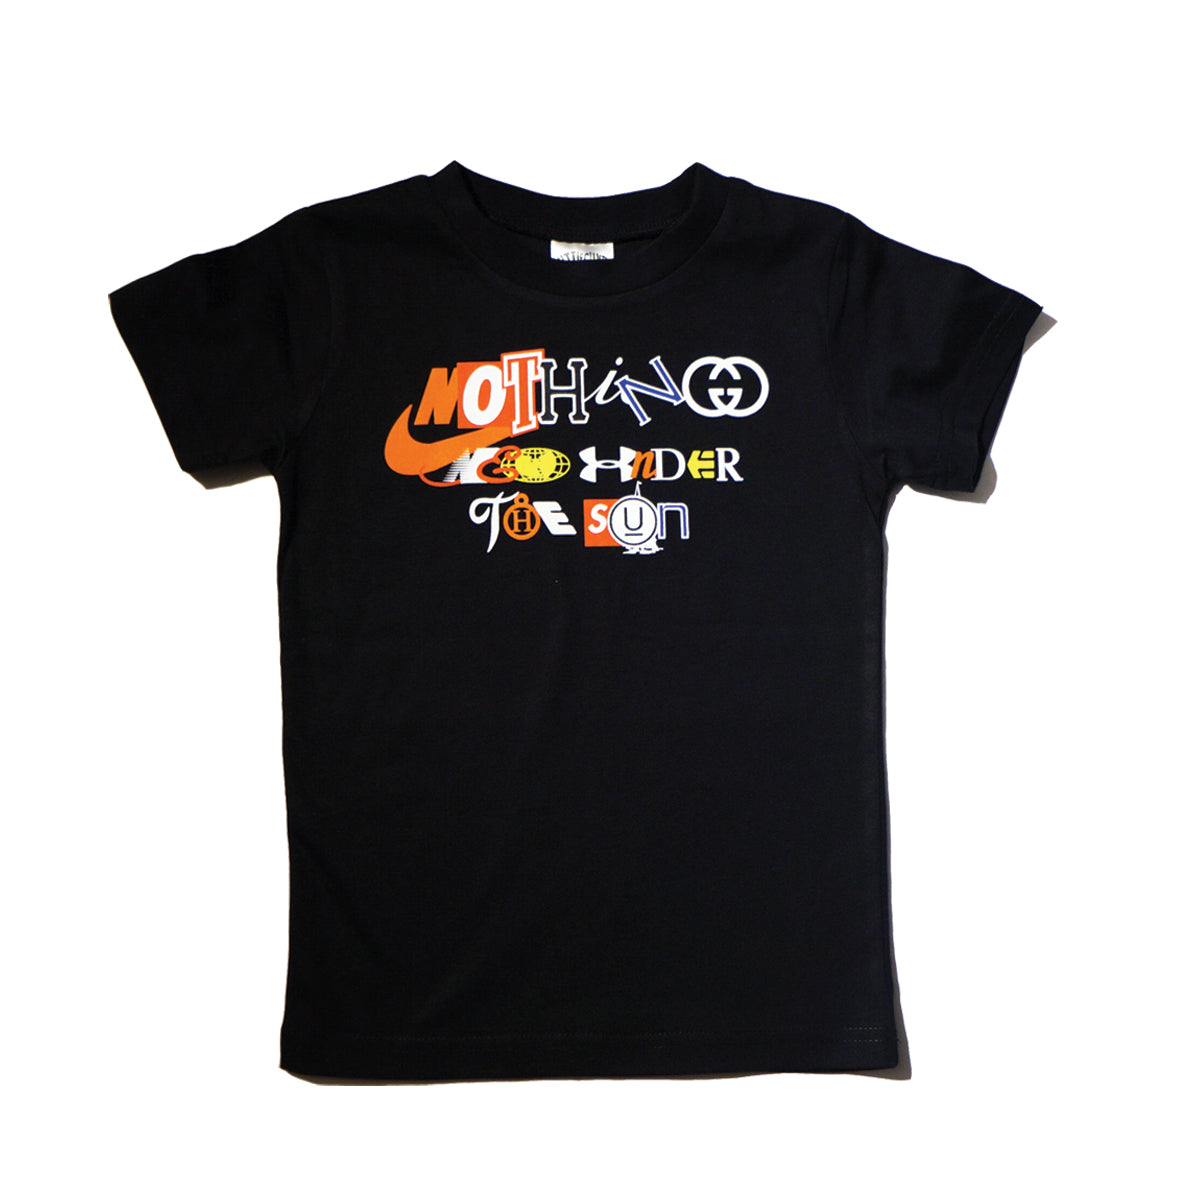 Nothin New T-shirt (Black)